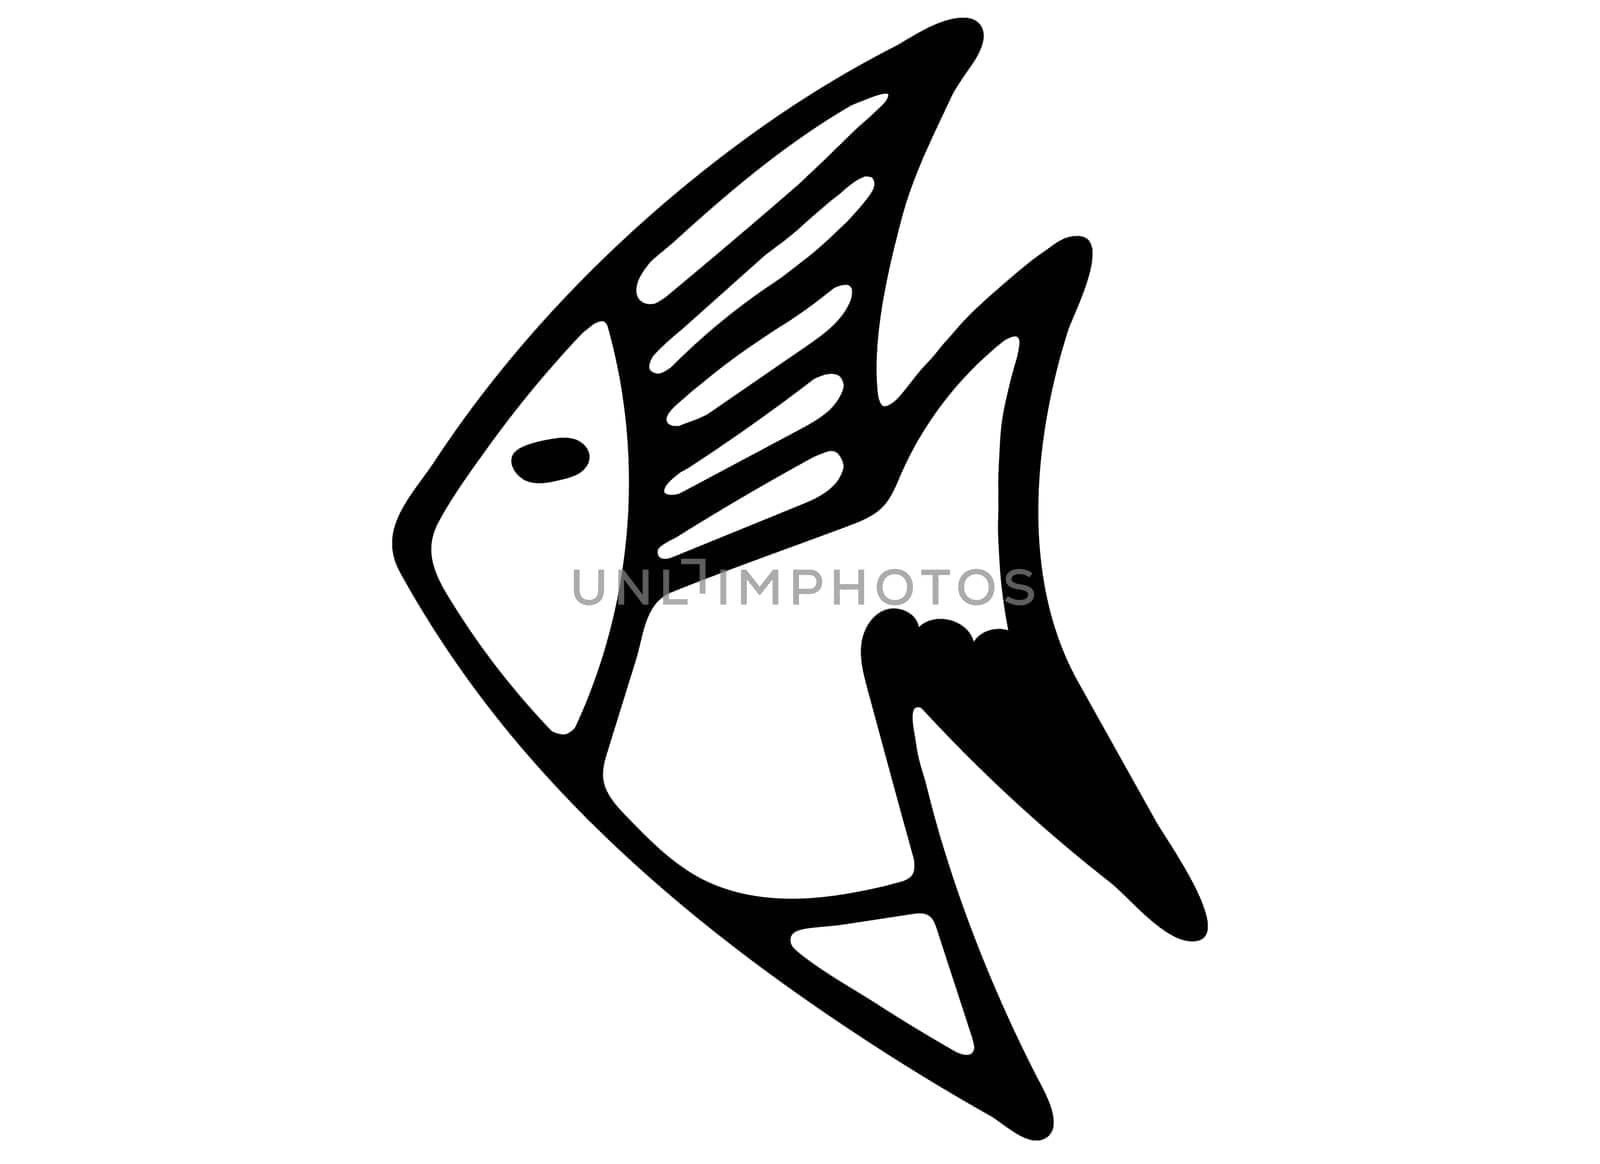 Black and White Fish Illustration Isolated on White Background. Clipart Fish Illustration.